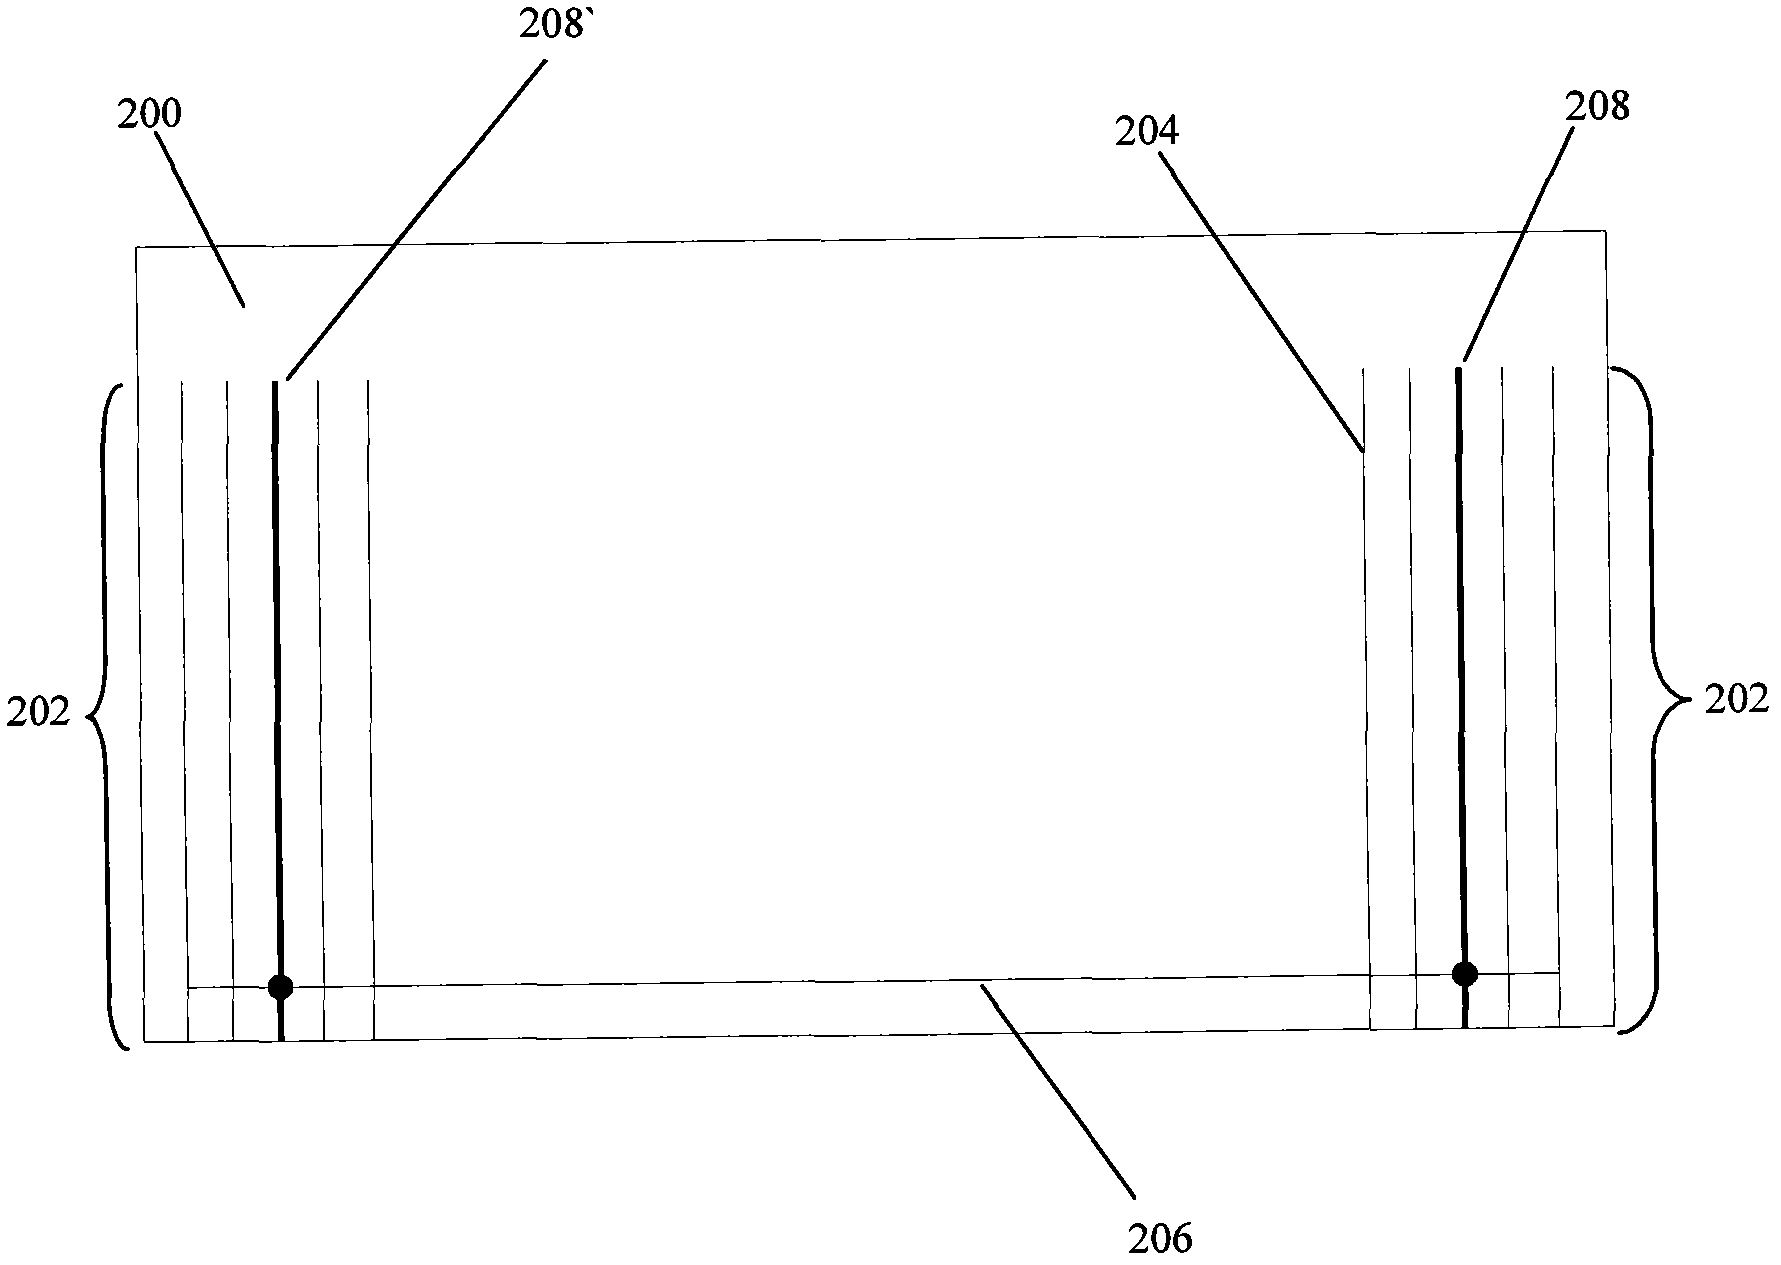 Repairing circuit for displaying panel